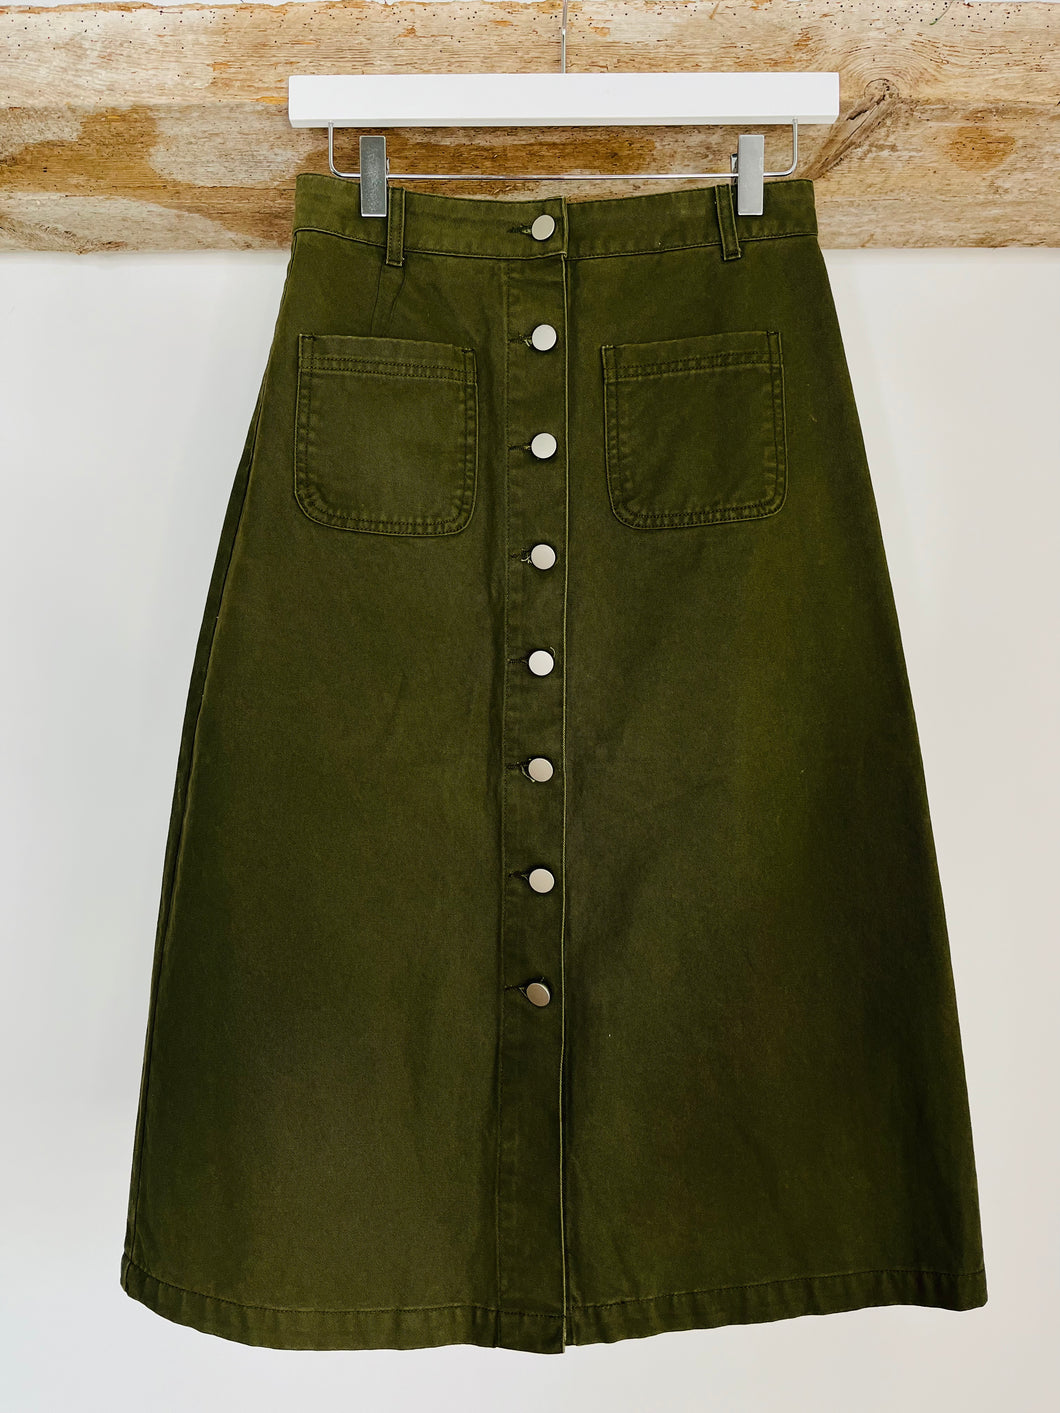 Button Down Skirt - Size 1